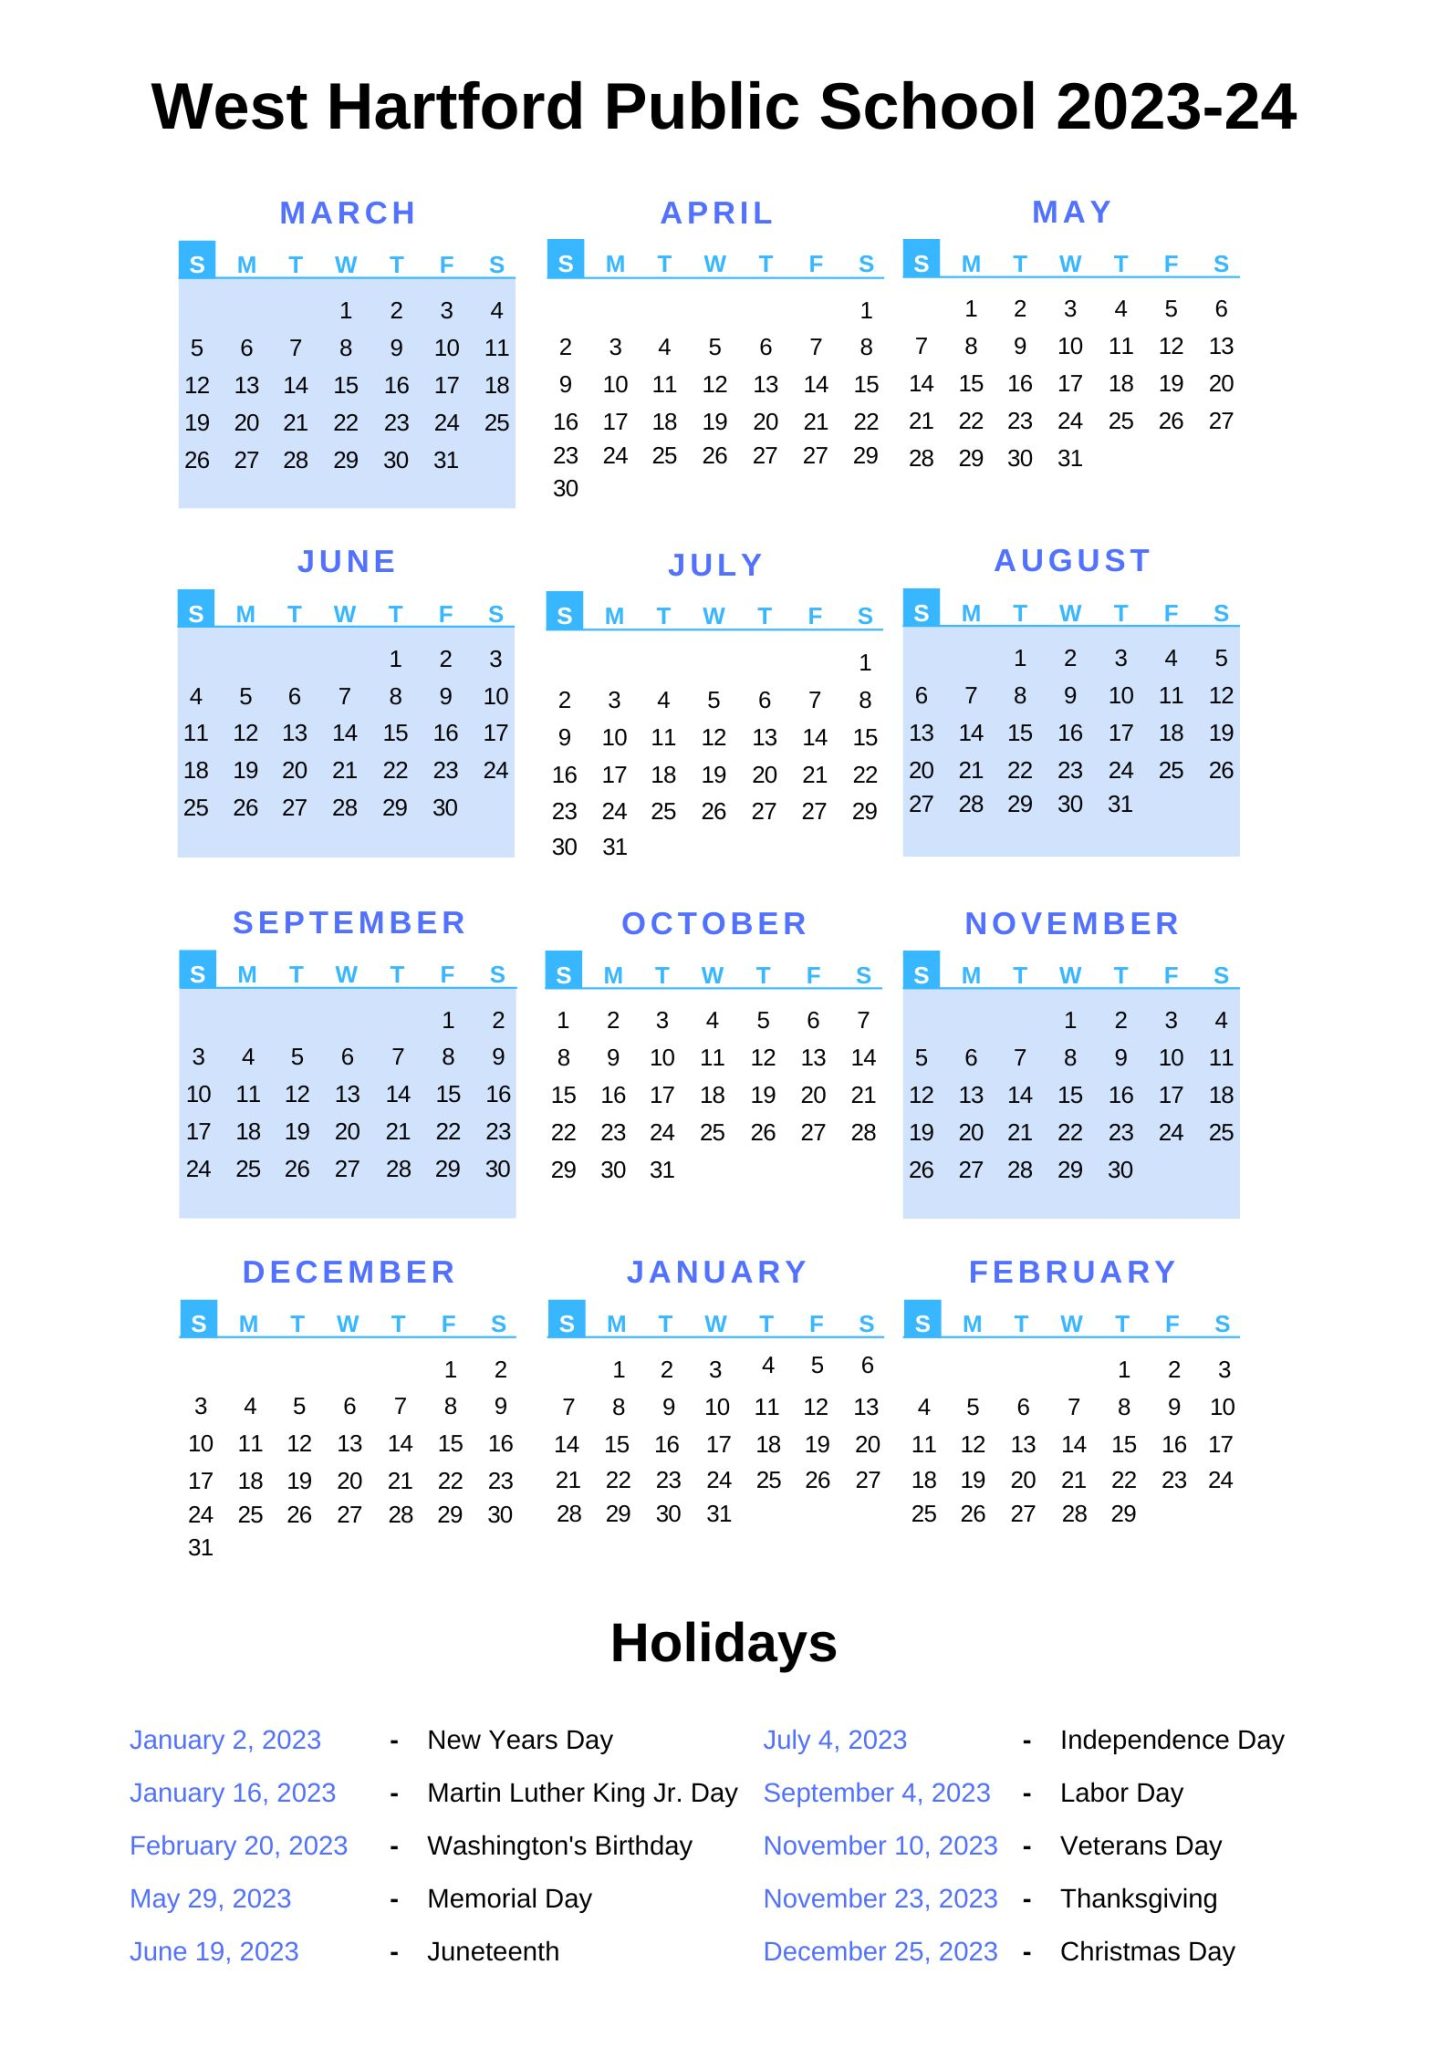 West Hartford Public Schools Calendar 2023-24 With Holidays